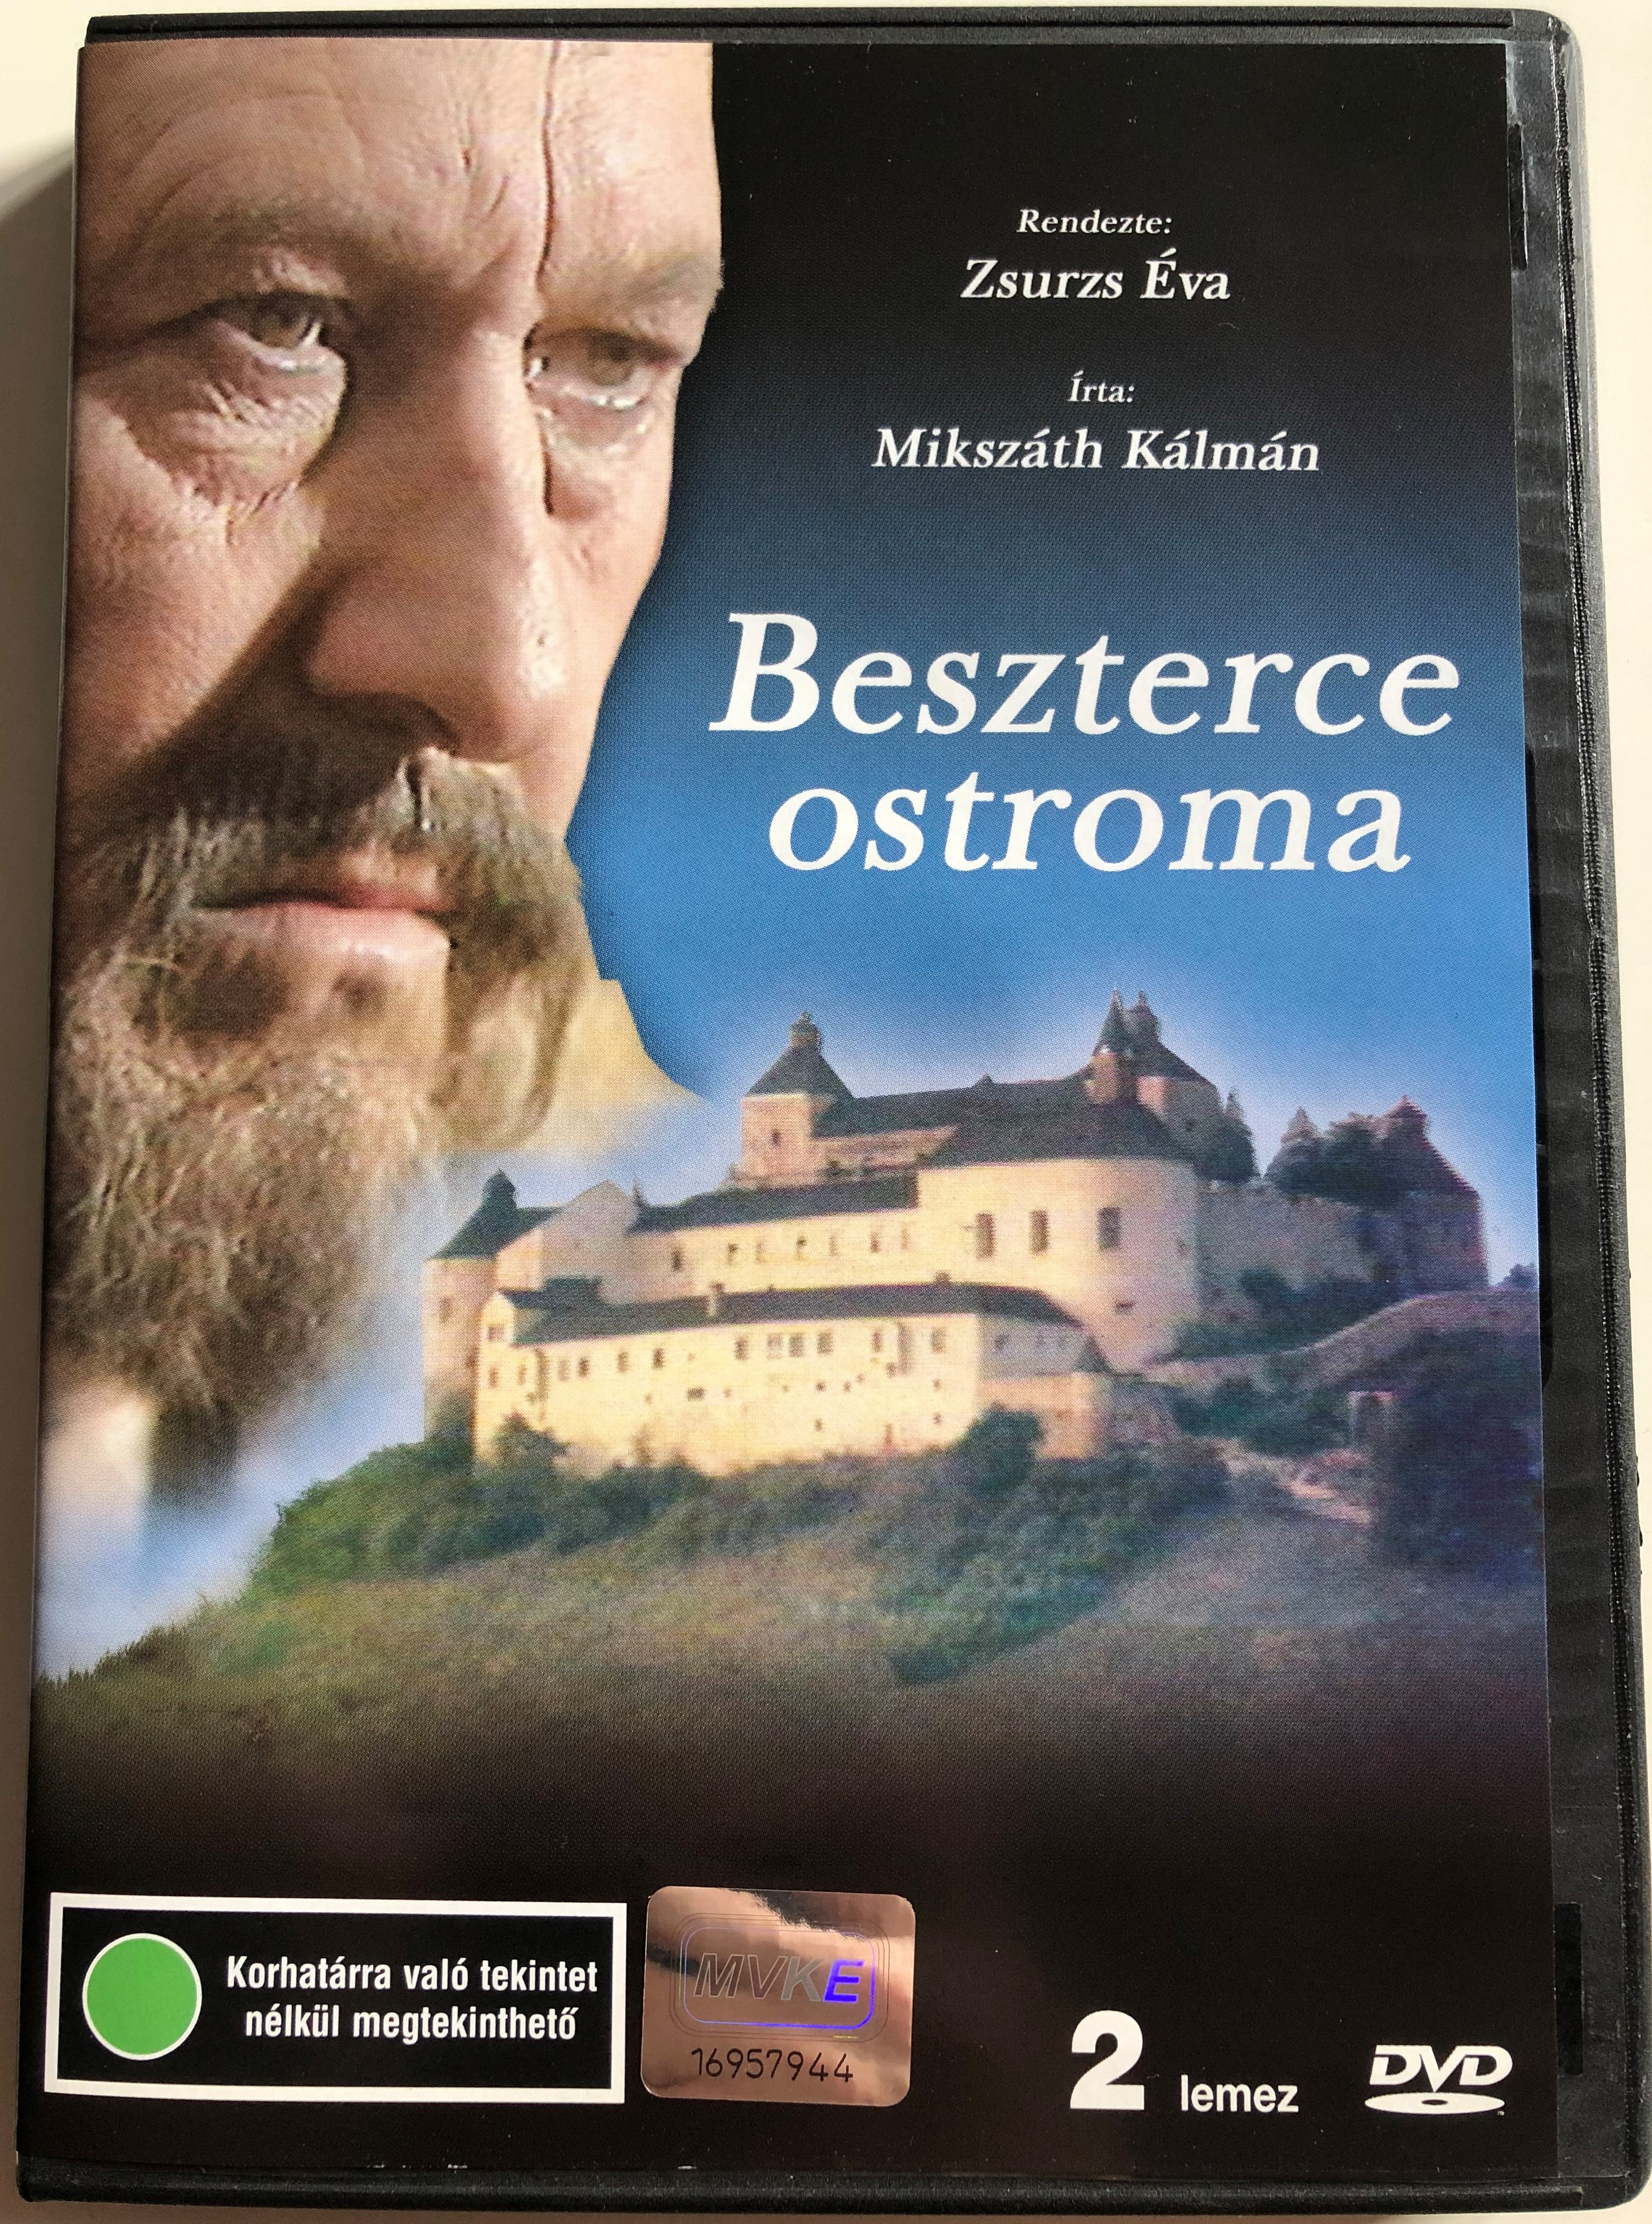 Beszterce ostroma DVD Siege of Bistrița 1.JPG